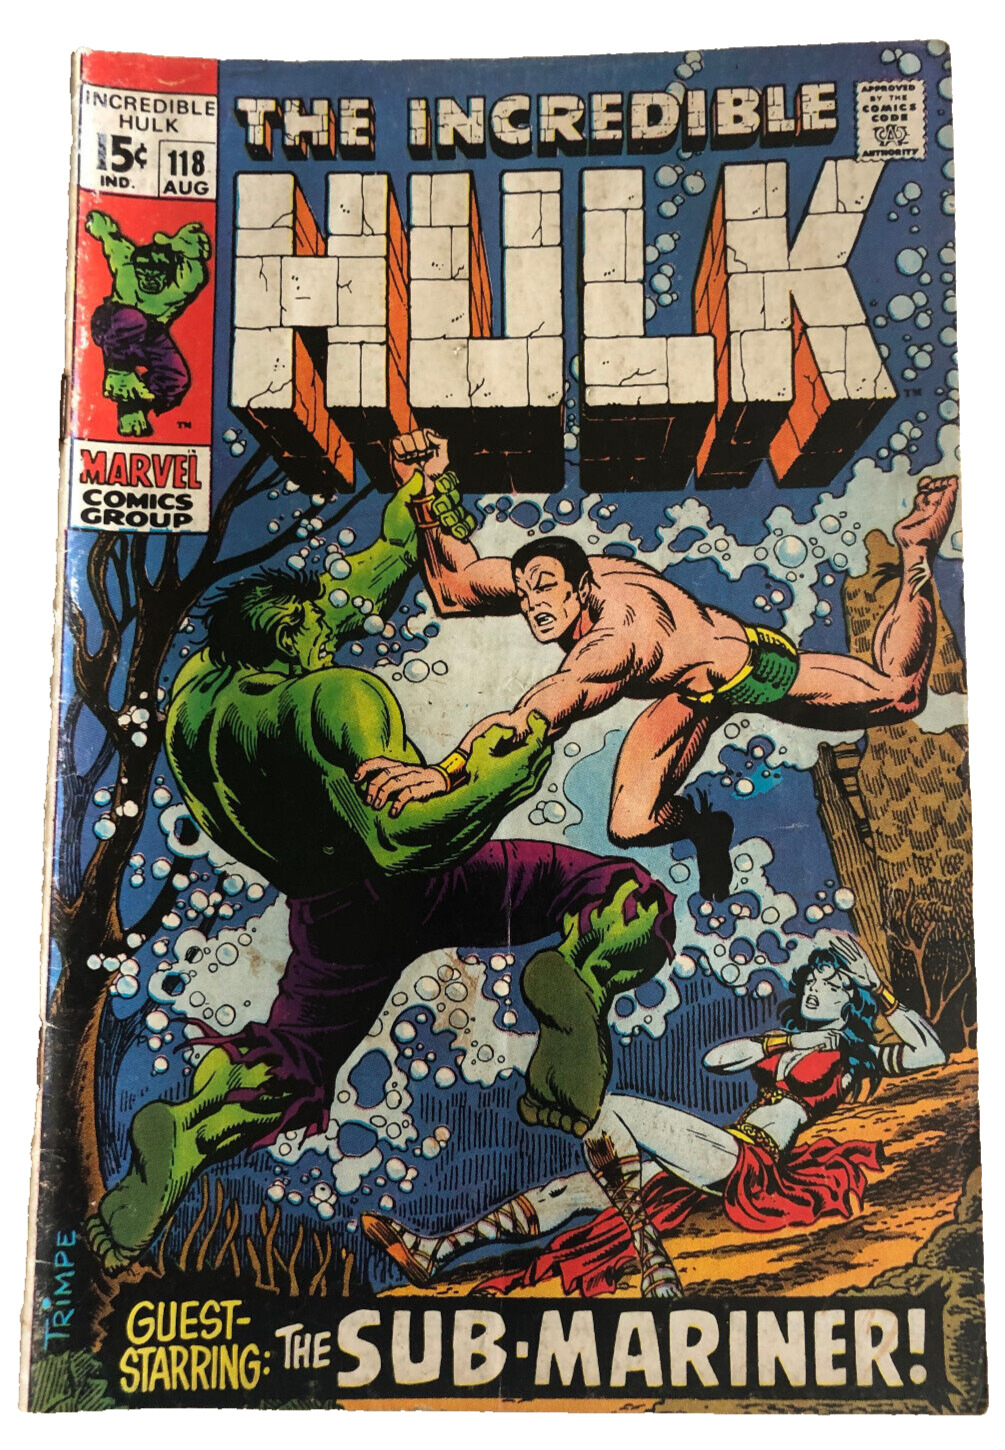 Marvel Comic The Incredible Hulk #118 August 1969 Hulk Sub-Mariner Original